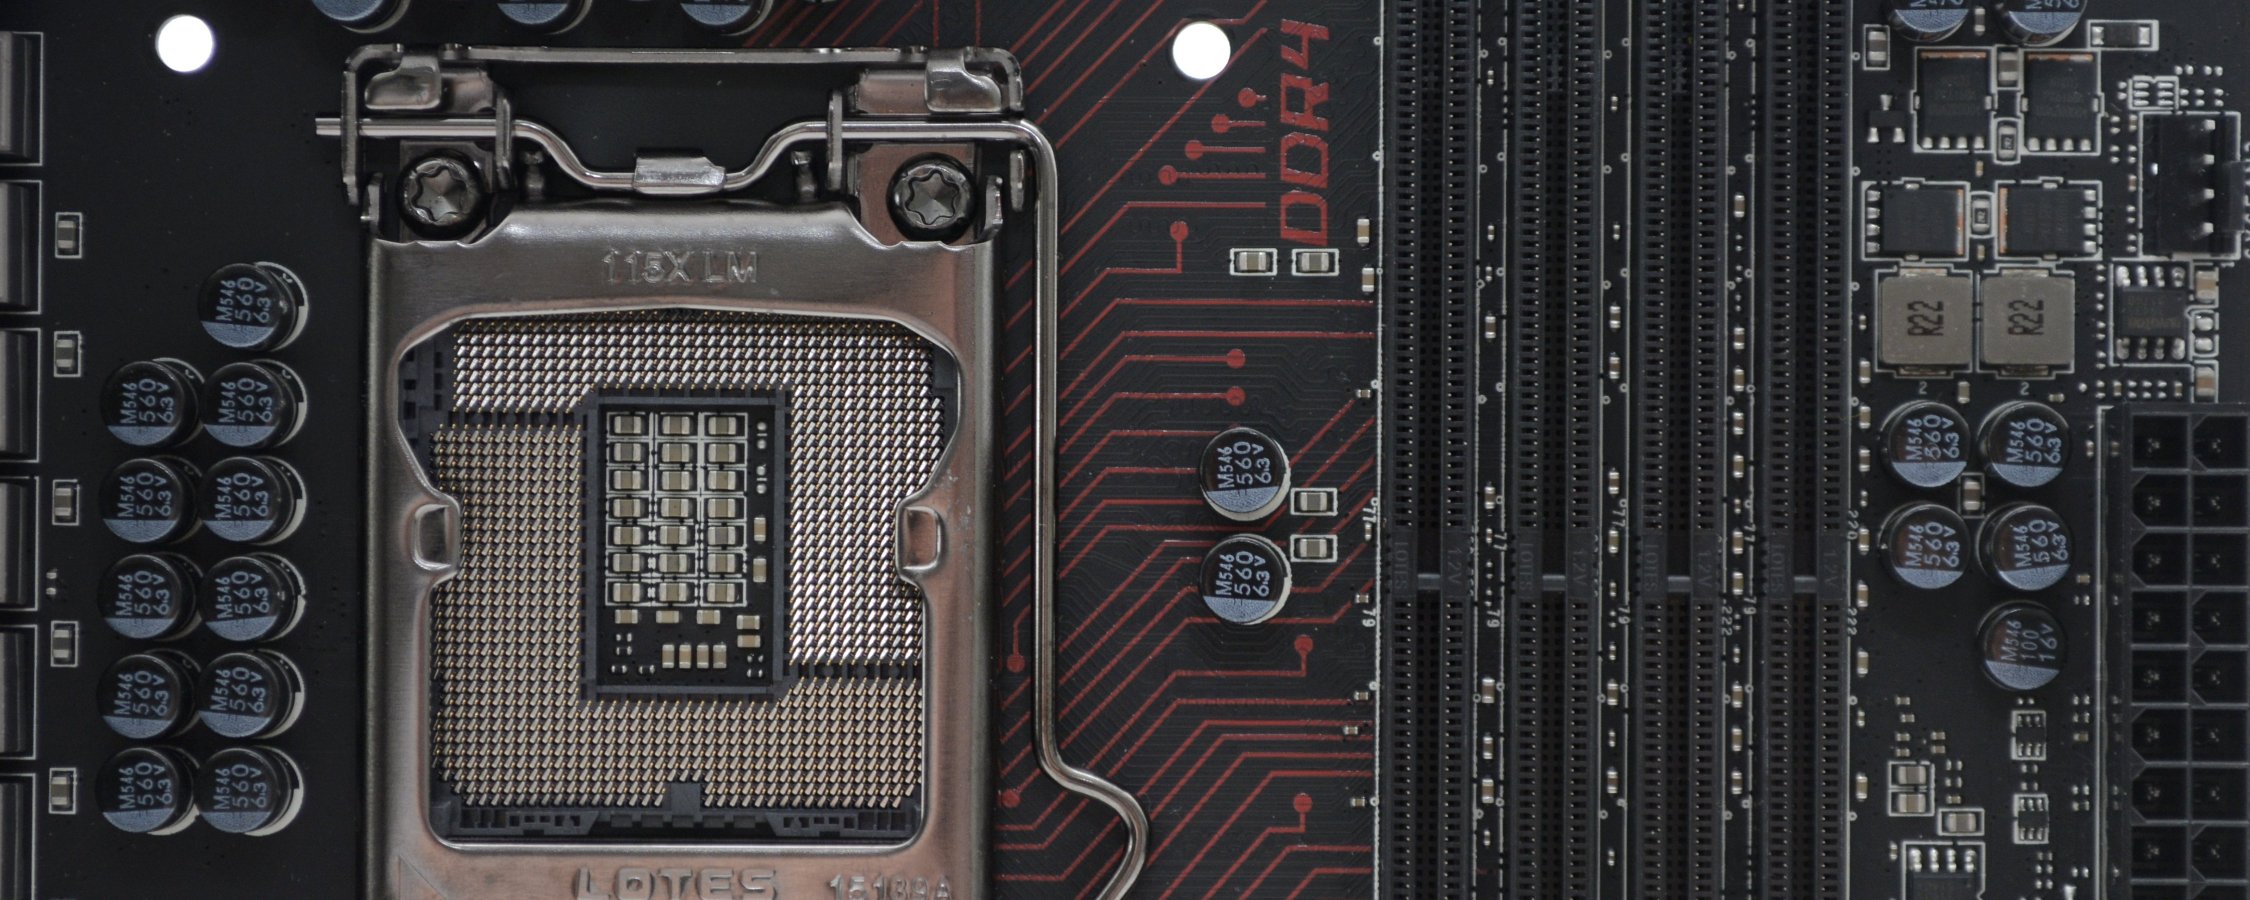 Intel Z170 Motherboard Roundup > Gigabyte Z170X-Gaming 7 | TechSpot